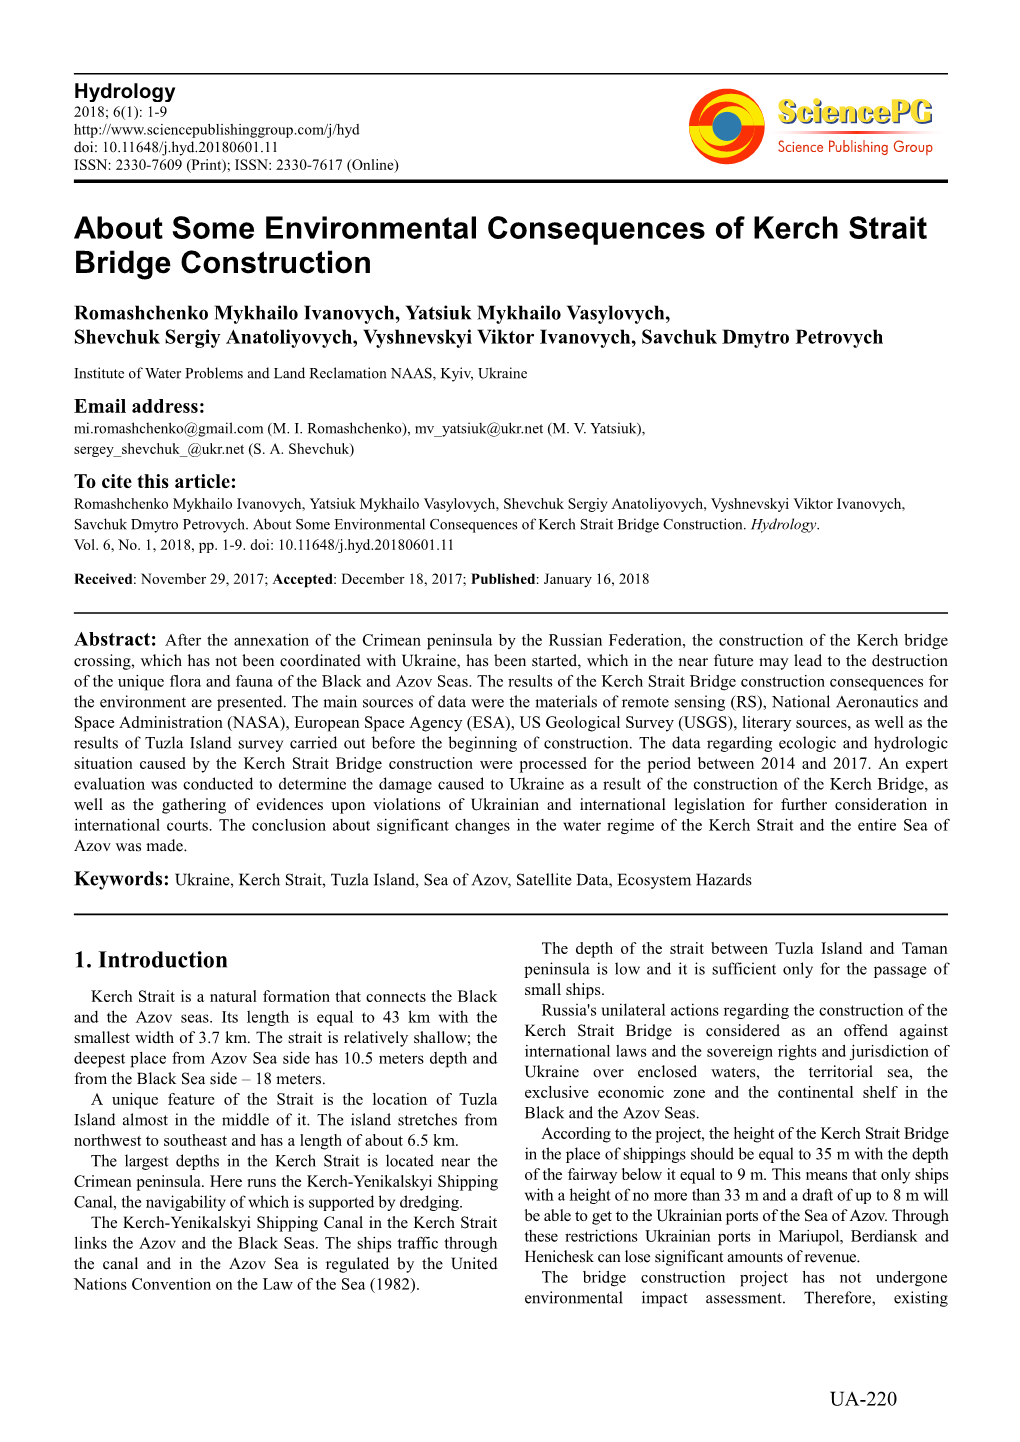 About Some Environmental Consequences of Kerch Strait Bridge Construction